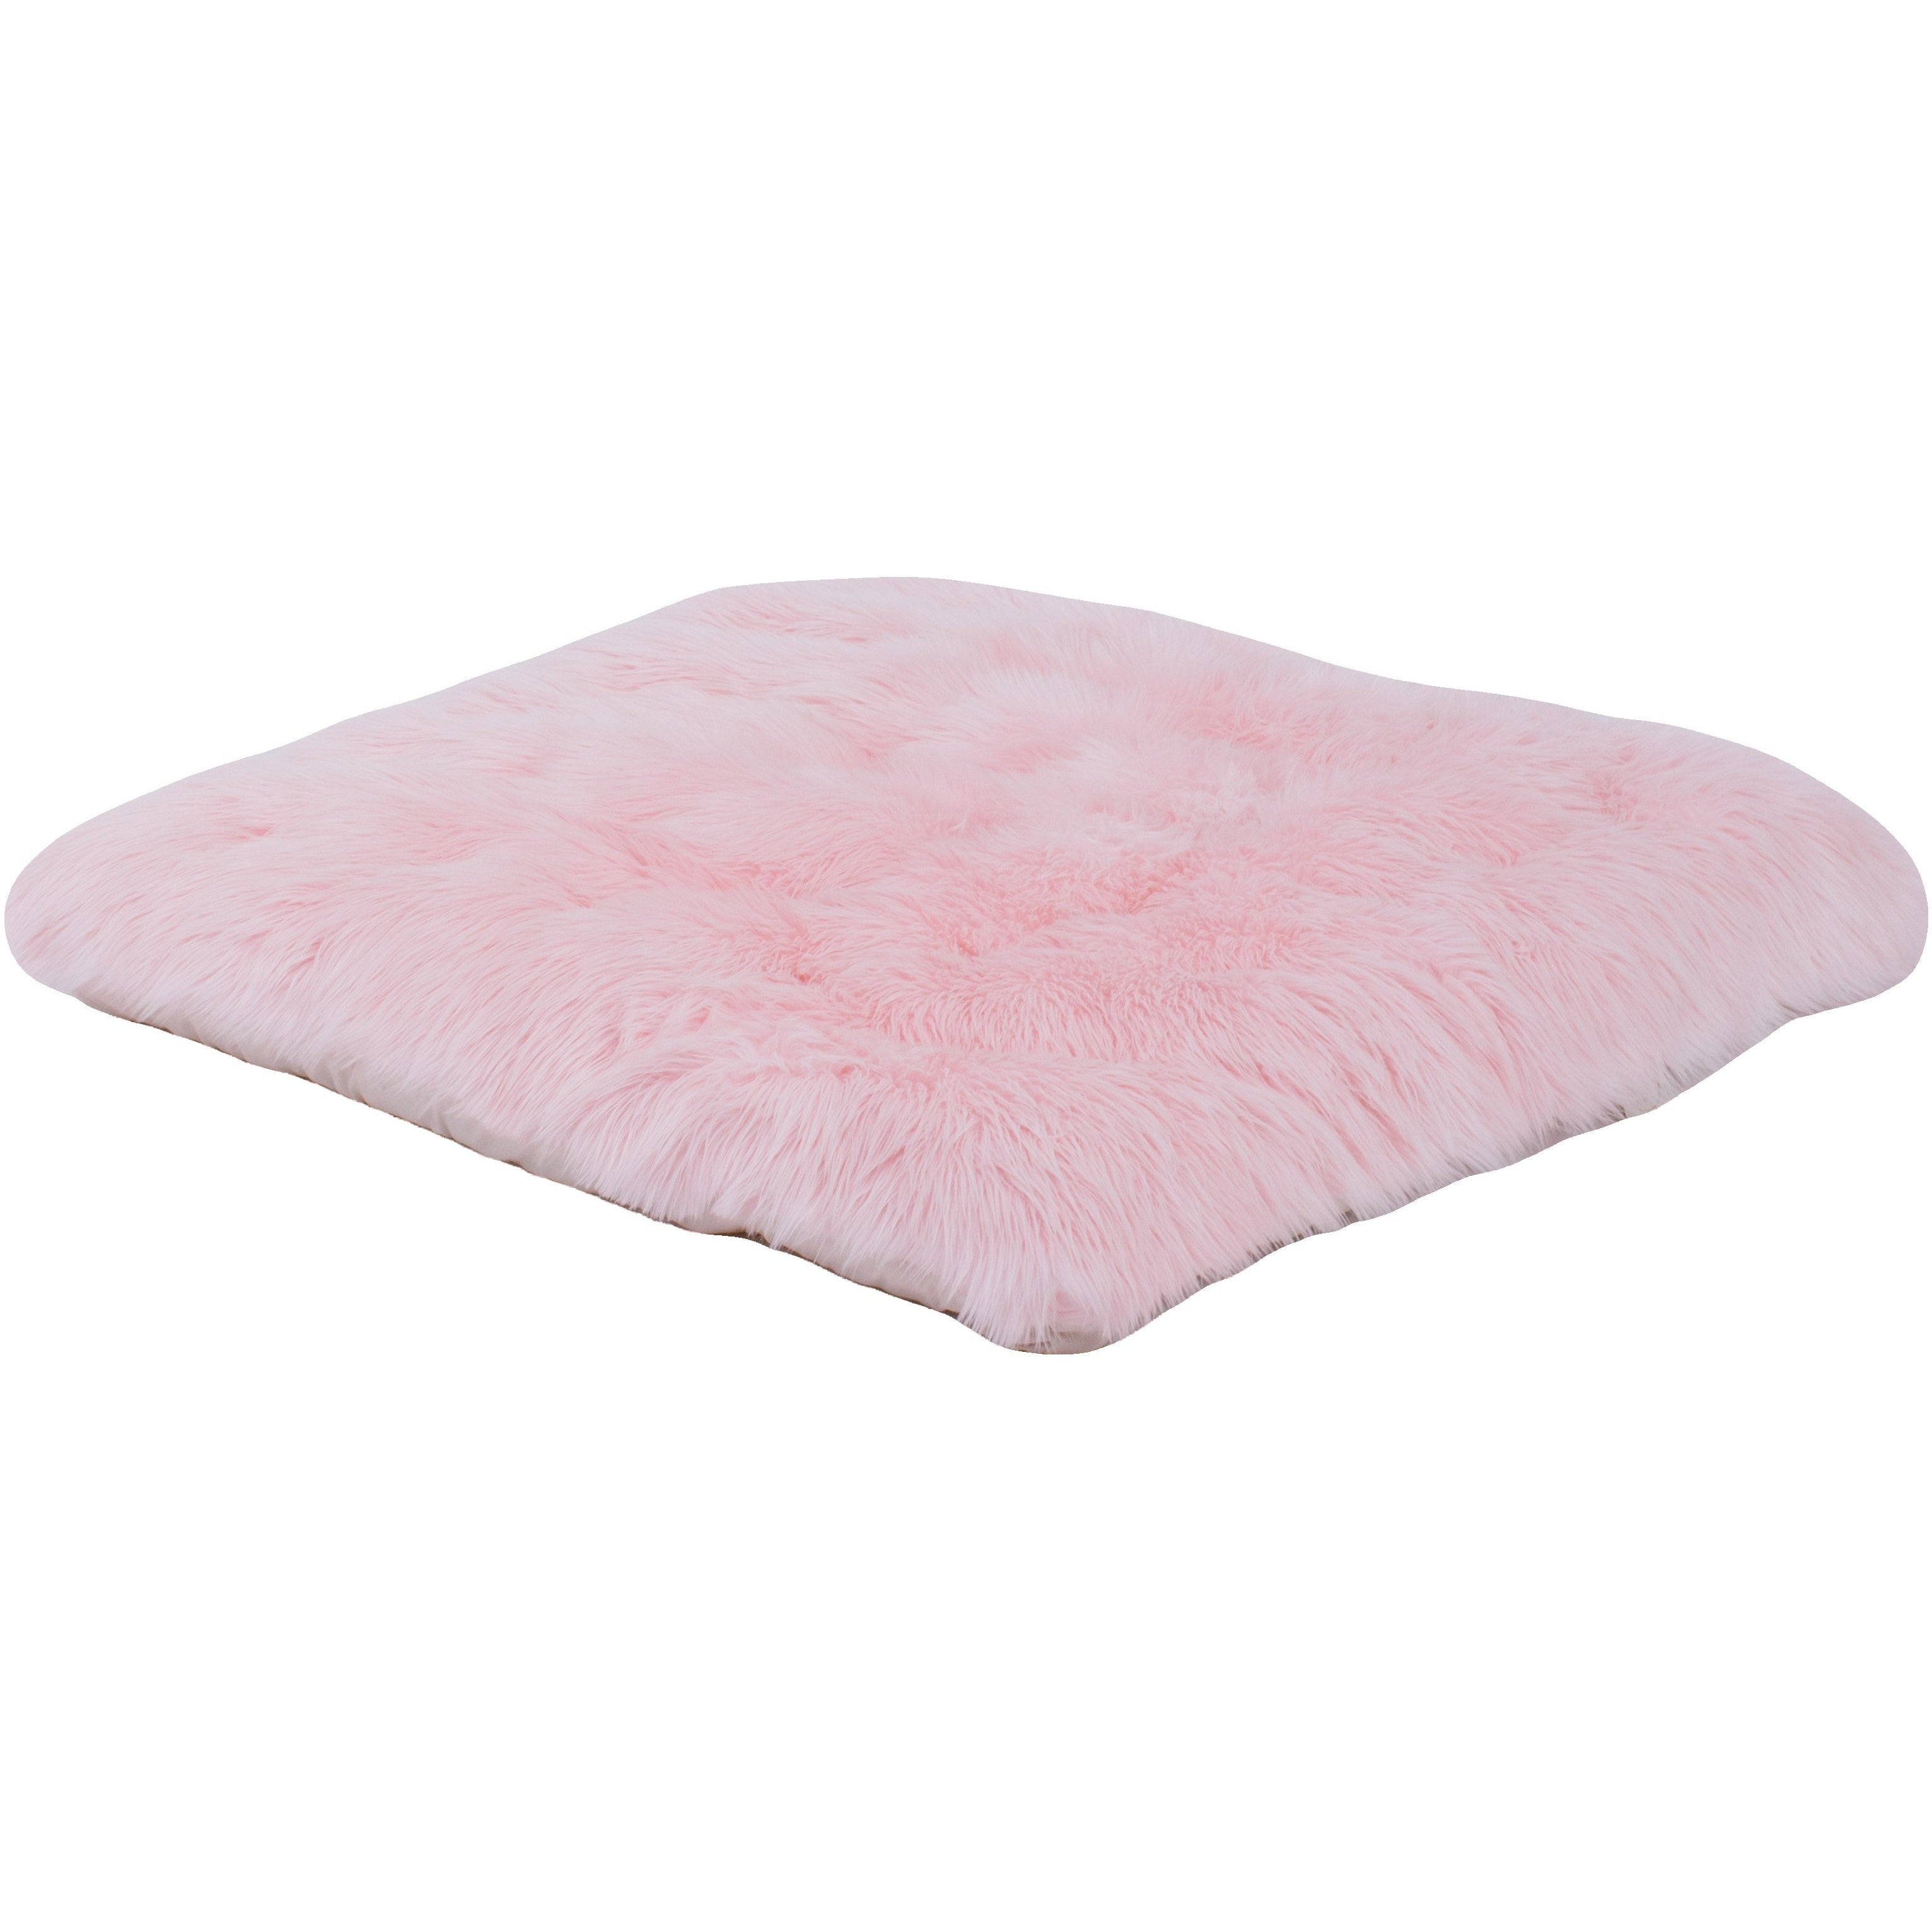 The Pink Polar Bear Teepee Mattress